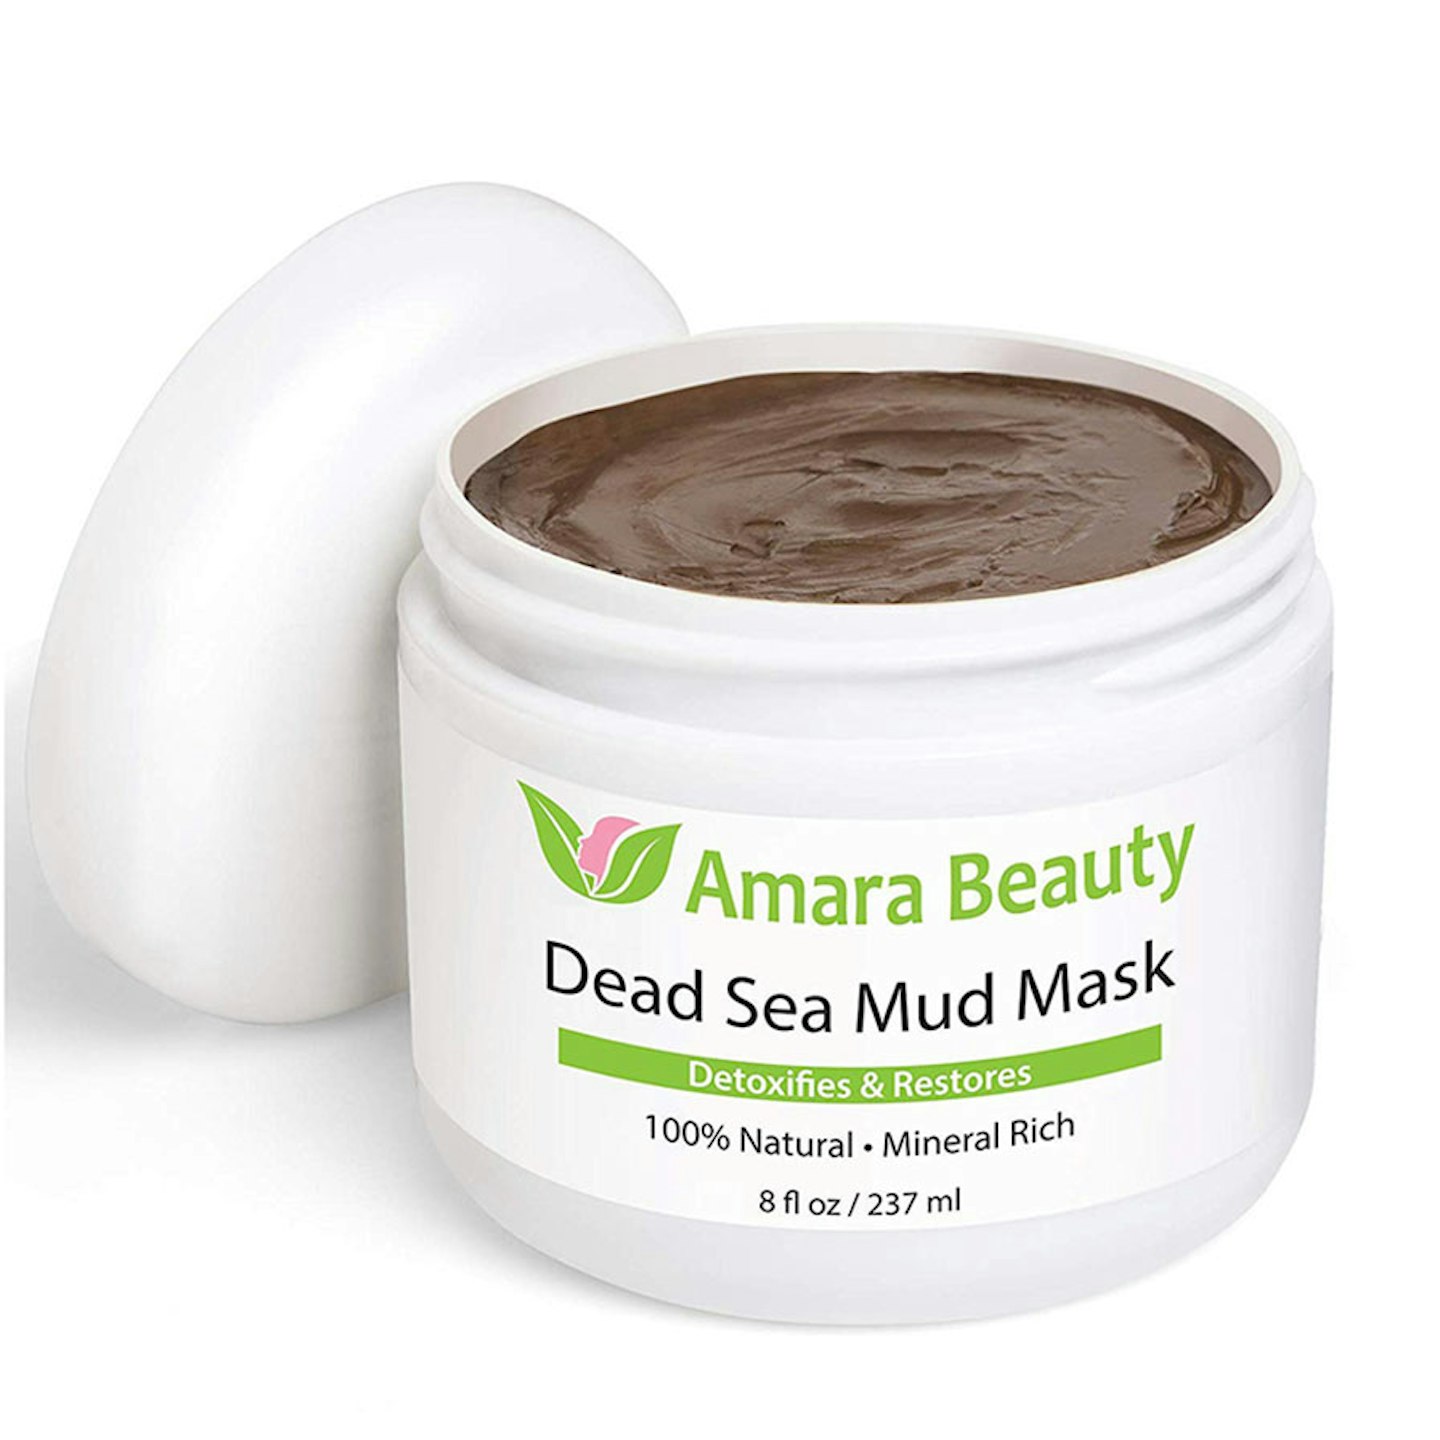 Amara Beauty Dead Sea Mud Mask for Face & Body, 19.95